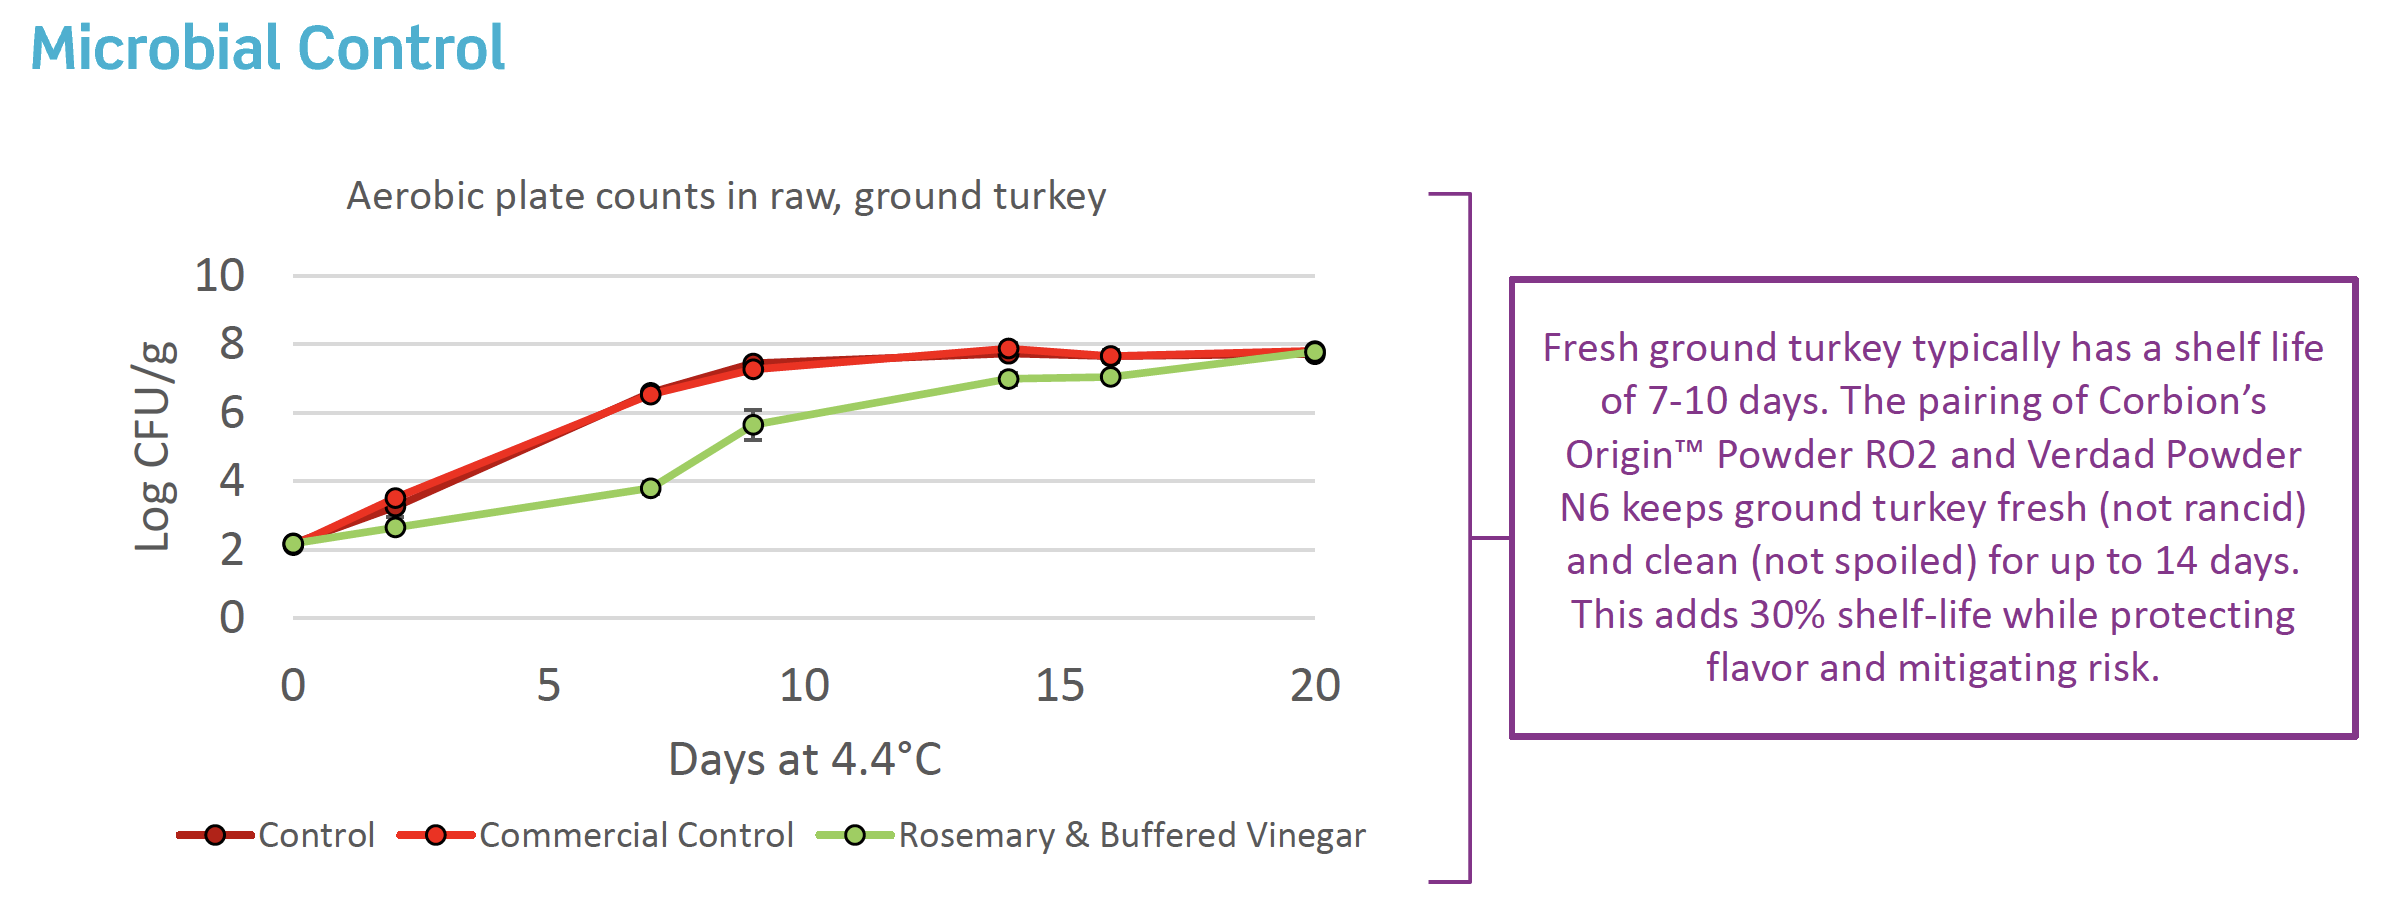 Aerobic plate counts in raw, ground turkey